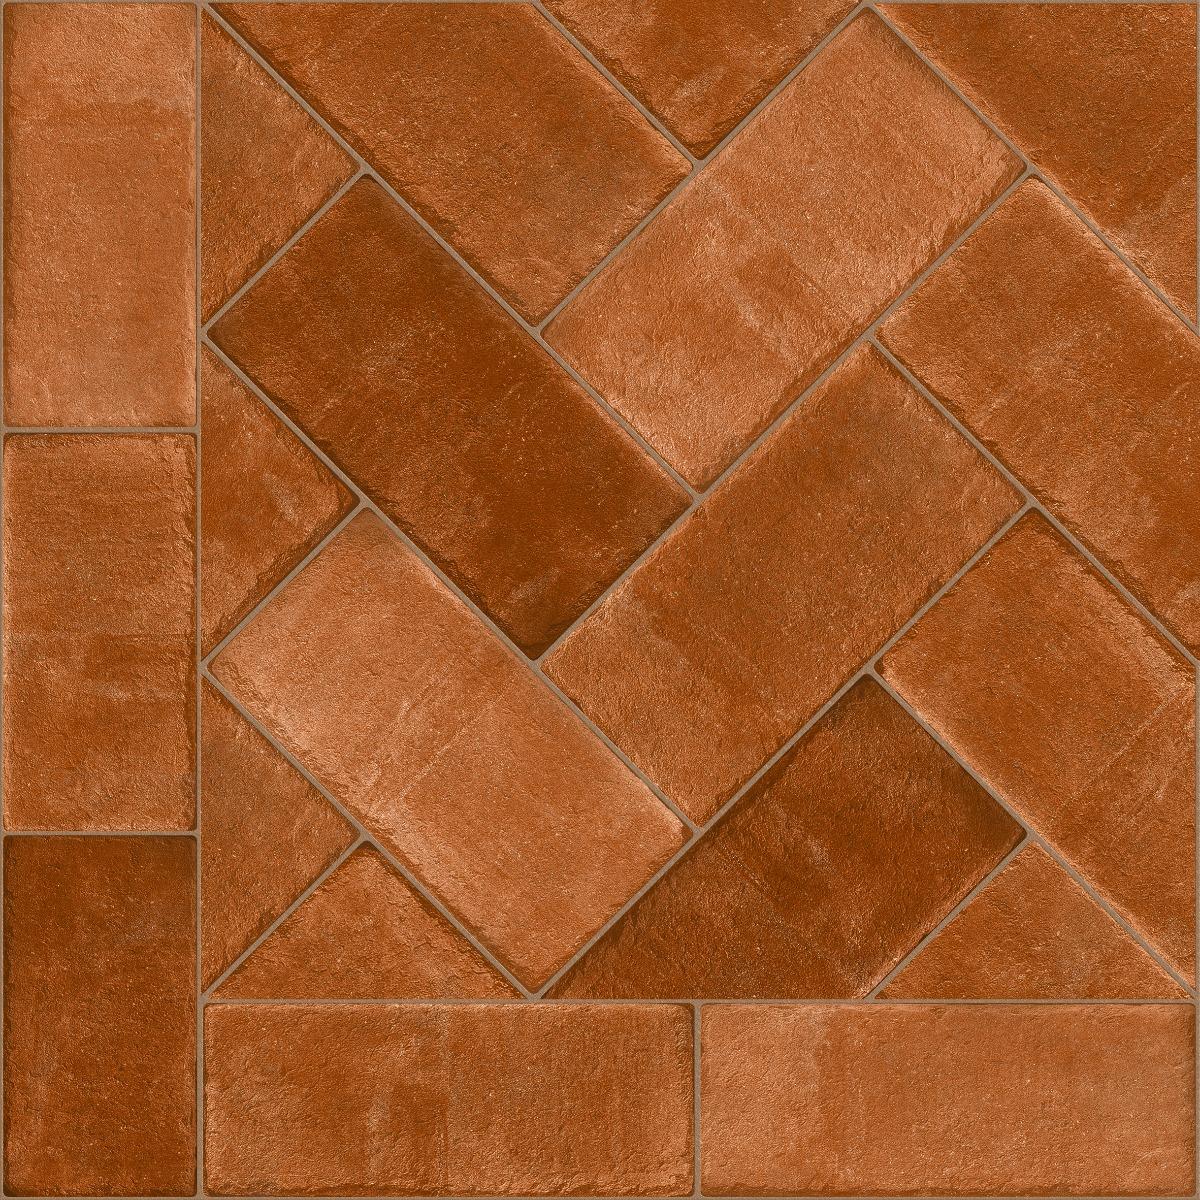 Wall Tiles for Bathroom Tiles, Living Room Tiles, Bedroom Tiles, Accent Tiles, Hospital Tiles, Bar/Restaurant, Commercial/Office, Outdoor Area